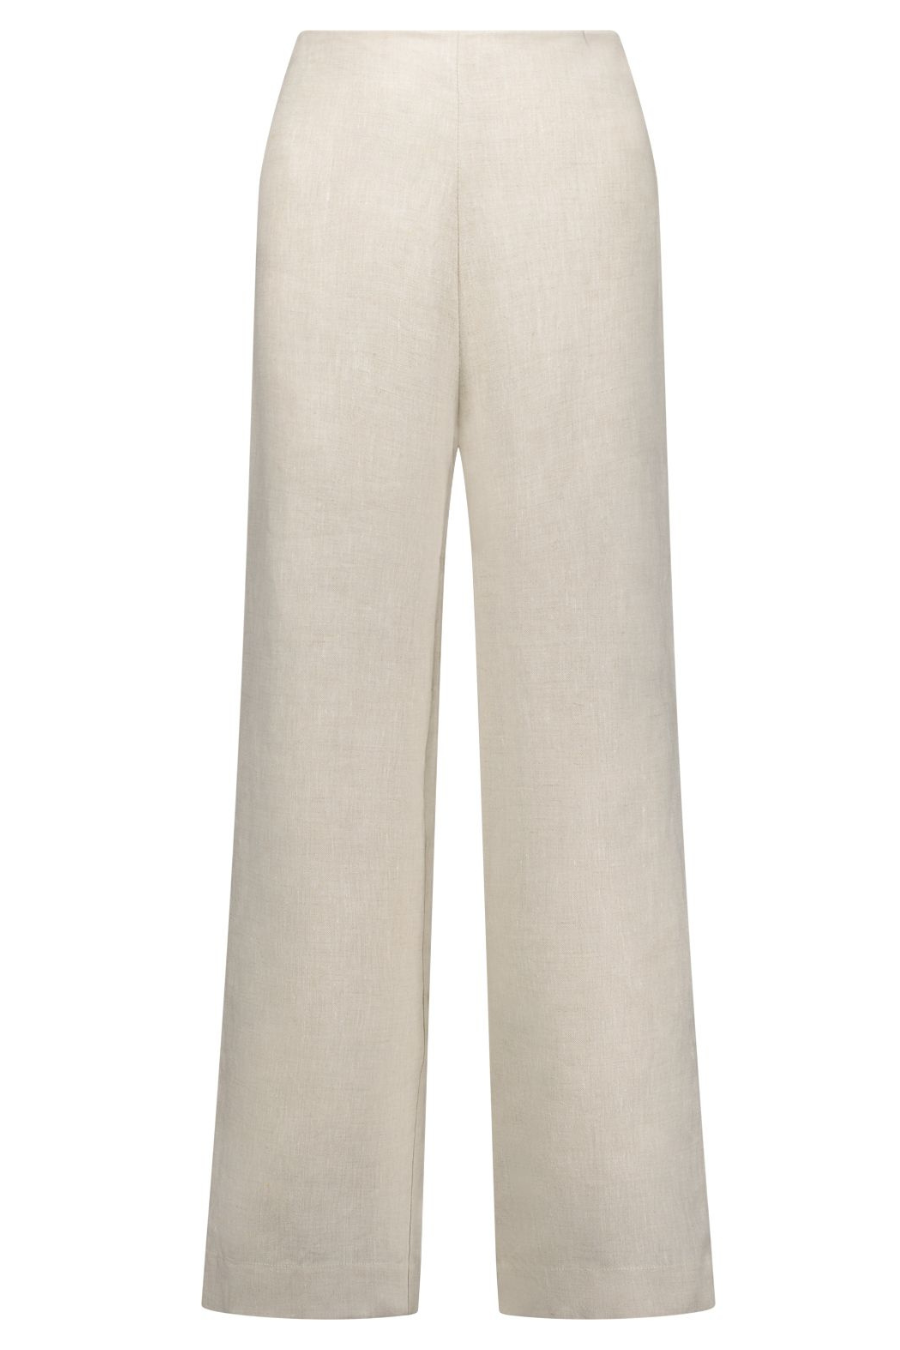 Milly Pant Natural Linen | Caitlin Crisp – Deval boutique Wanaka